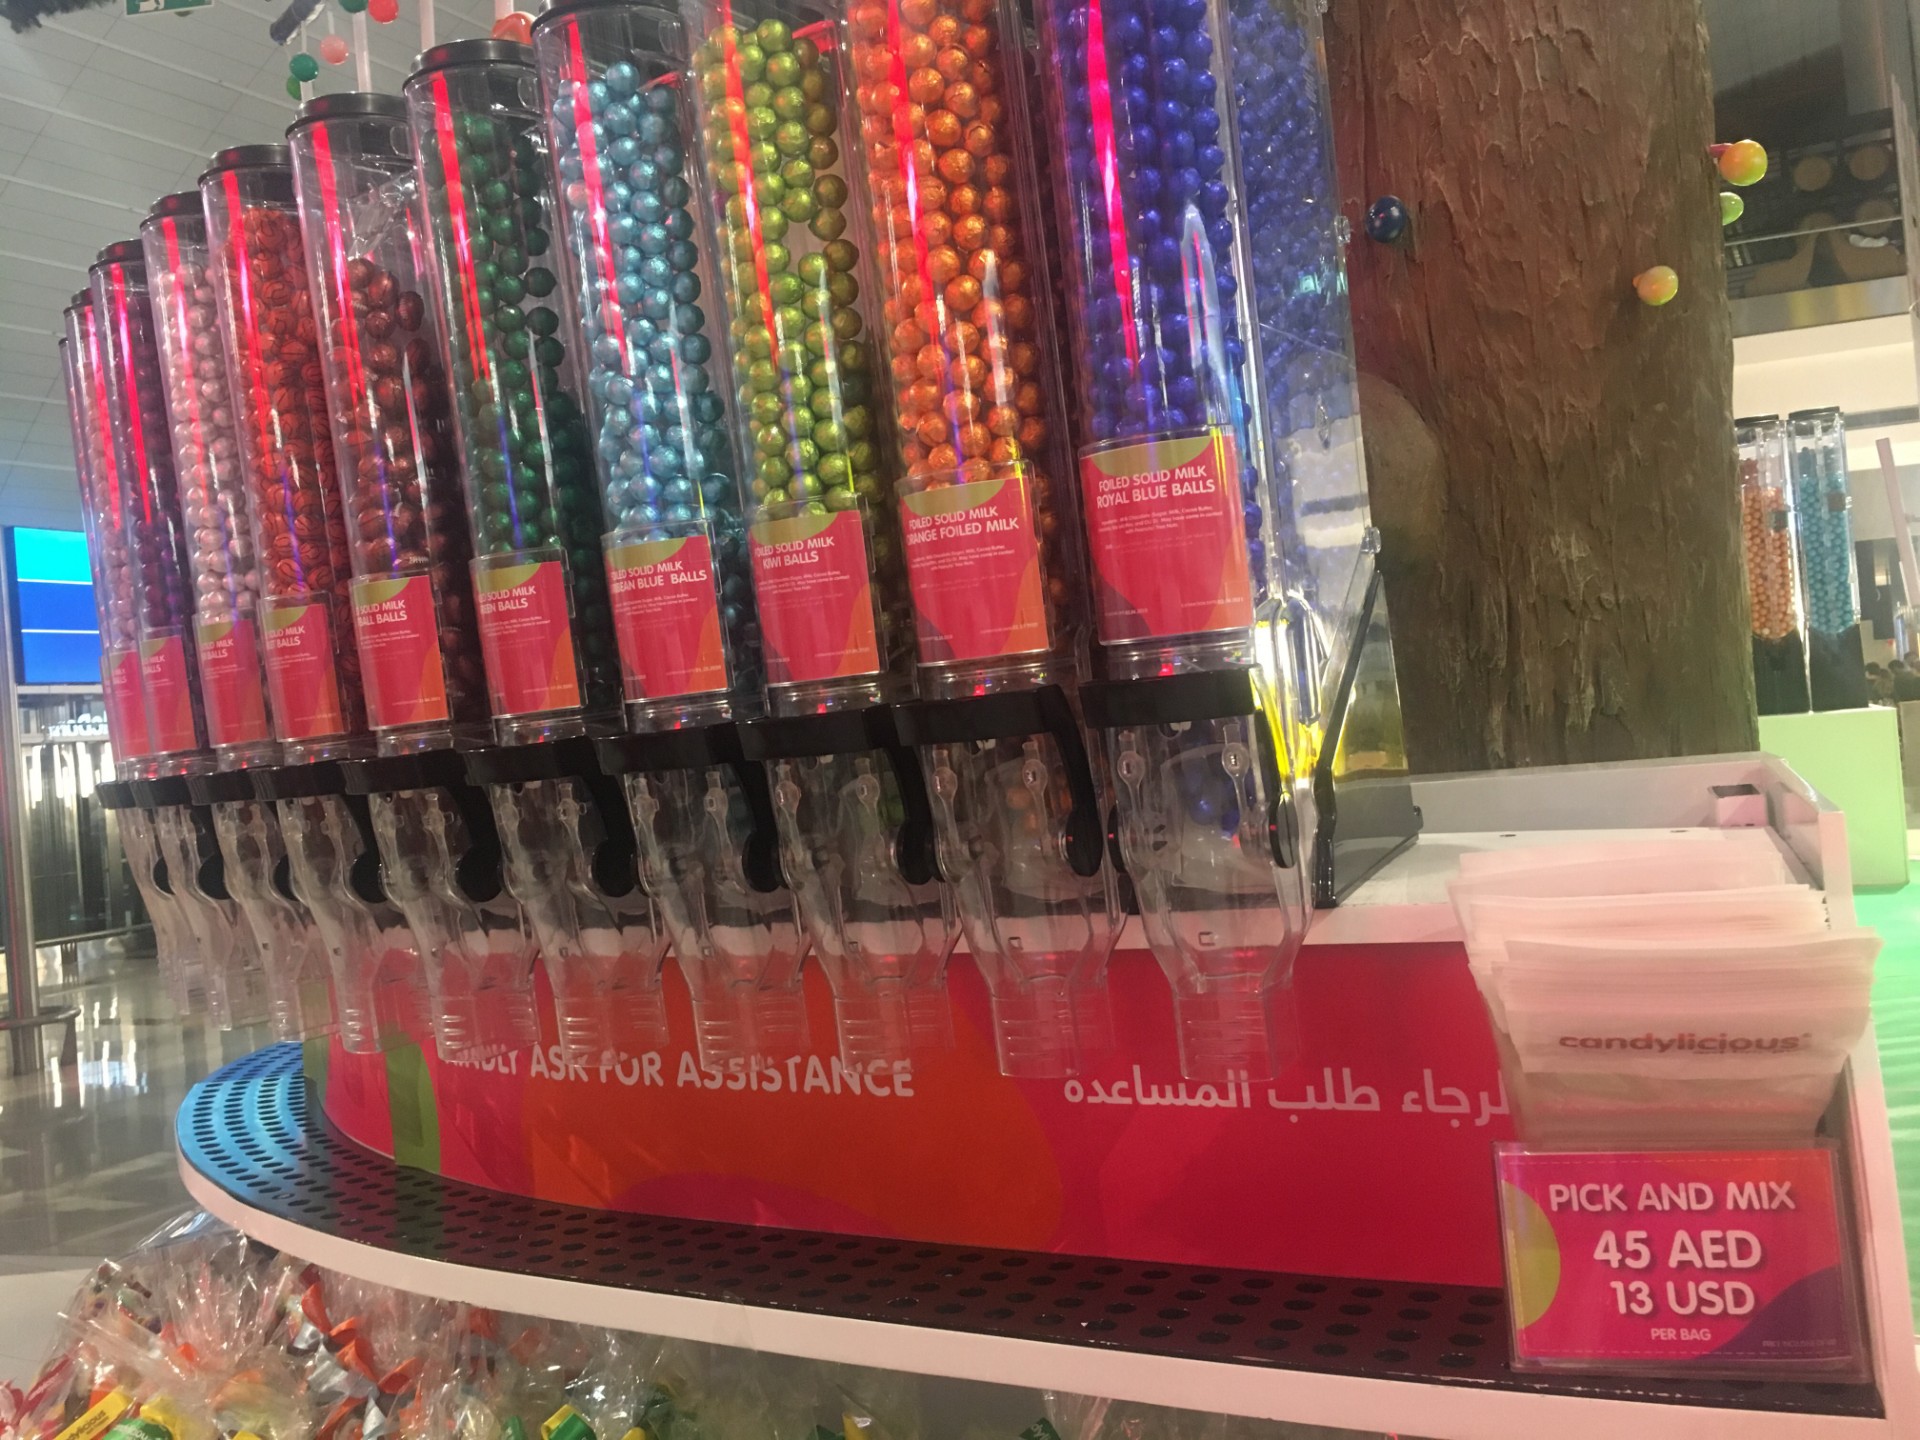 Aeroporto de Dubai Loja Candylicious